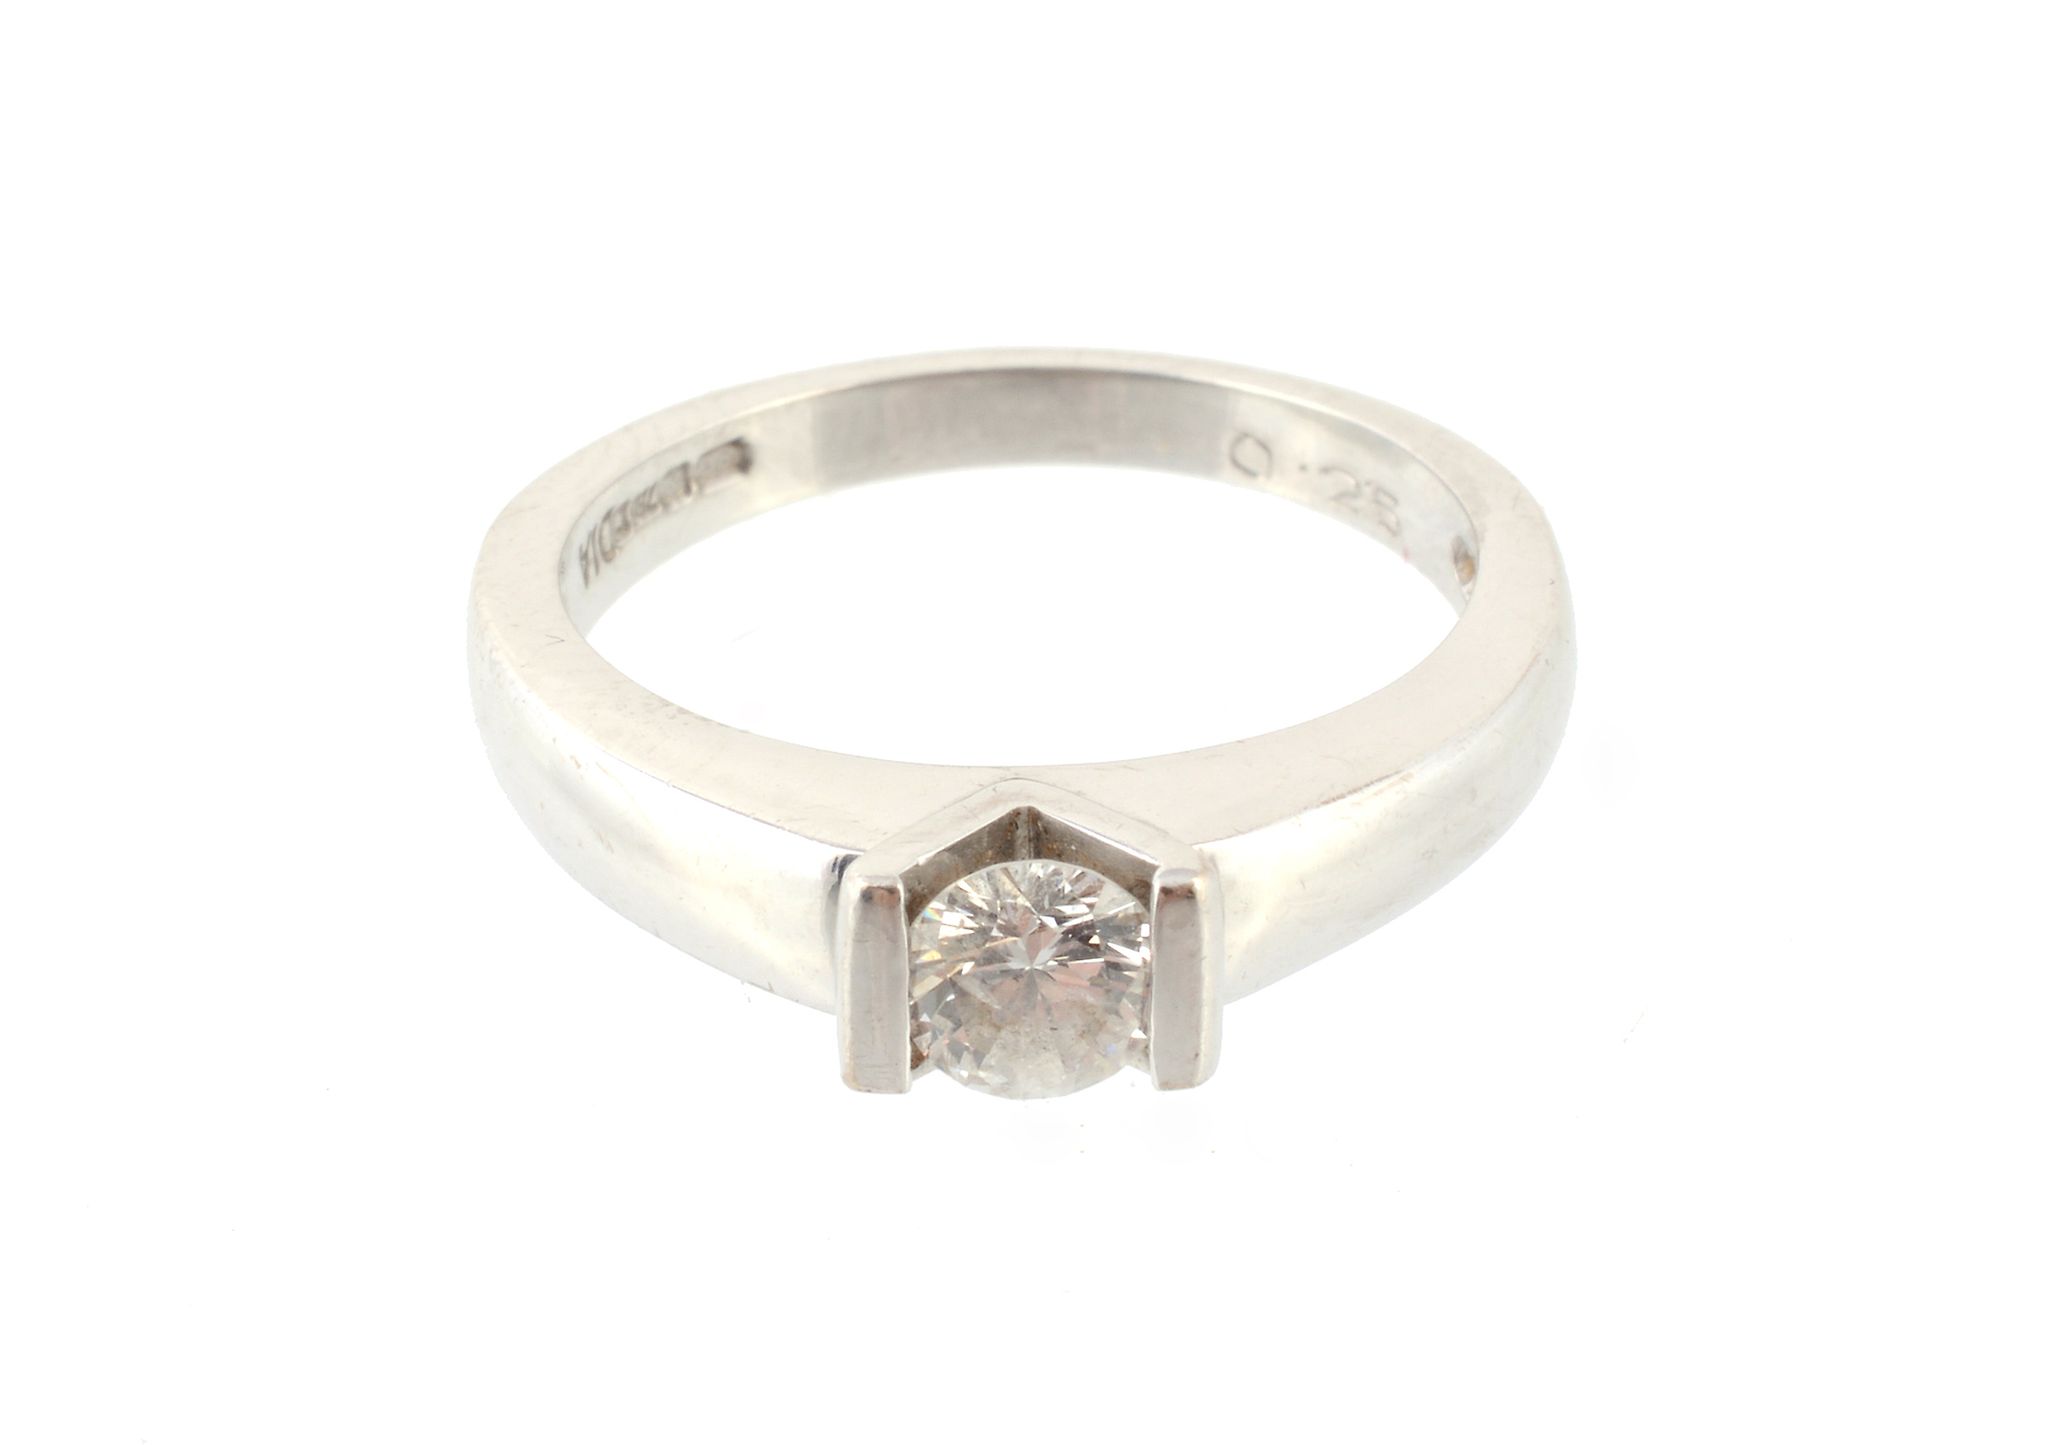 A single stone diamond ring, the brilliant cut diamond in a suspension setting, on a polished